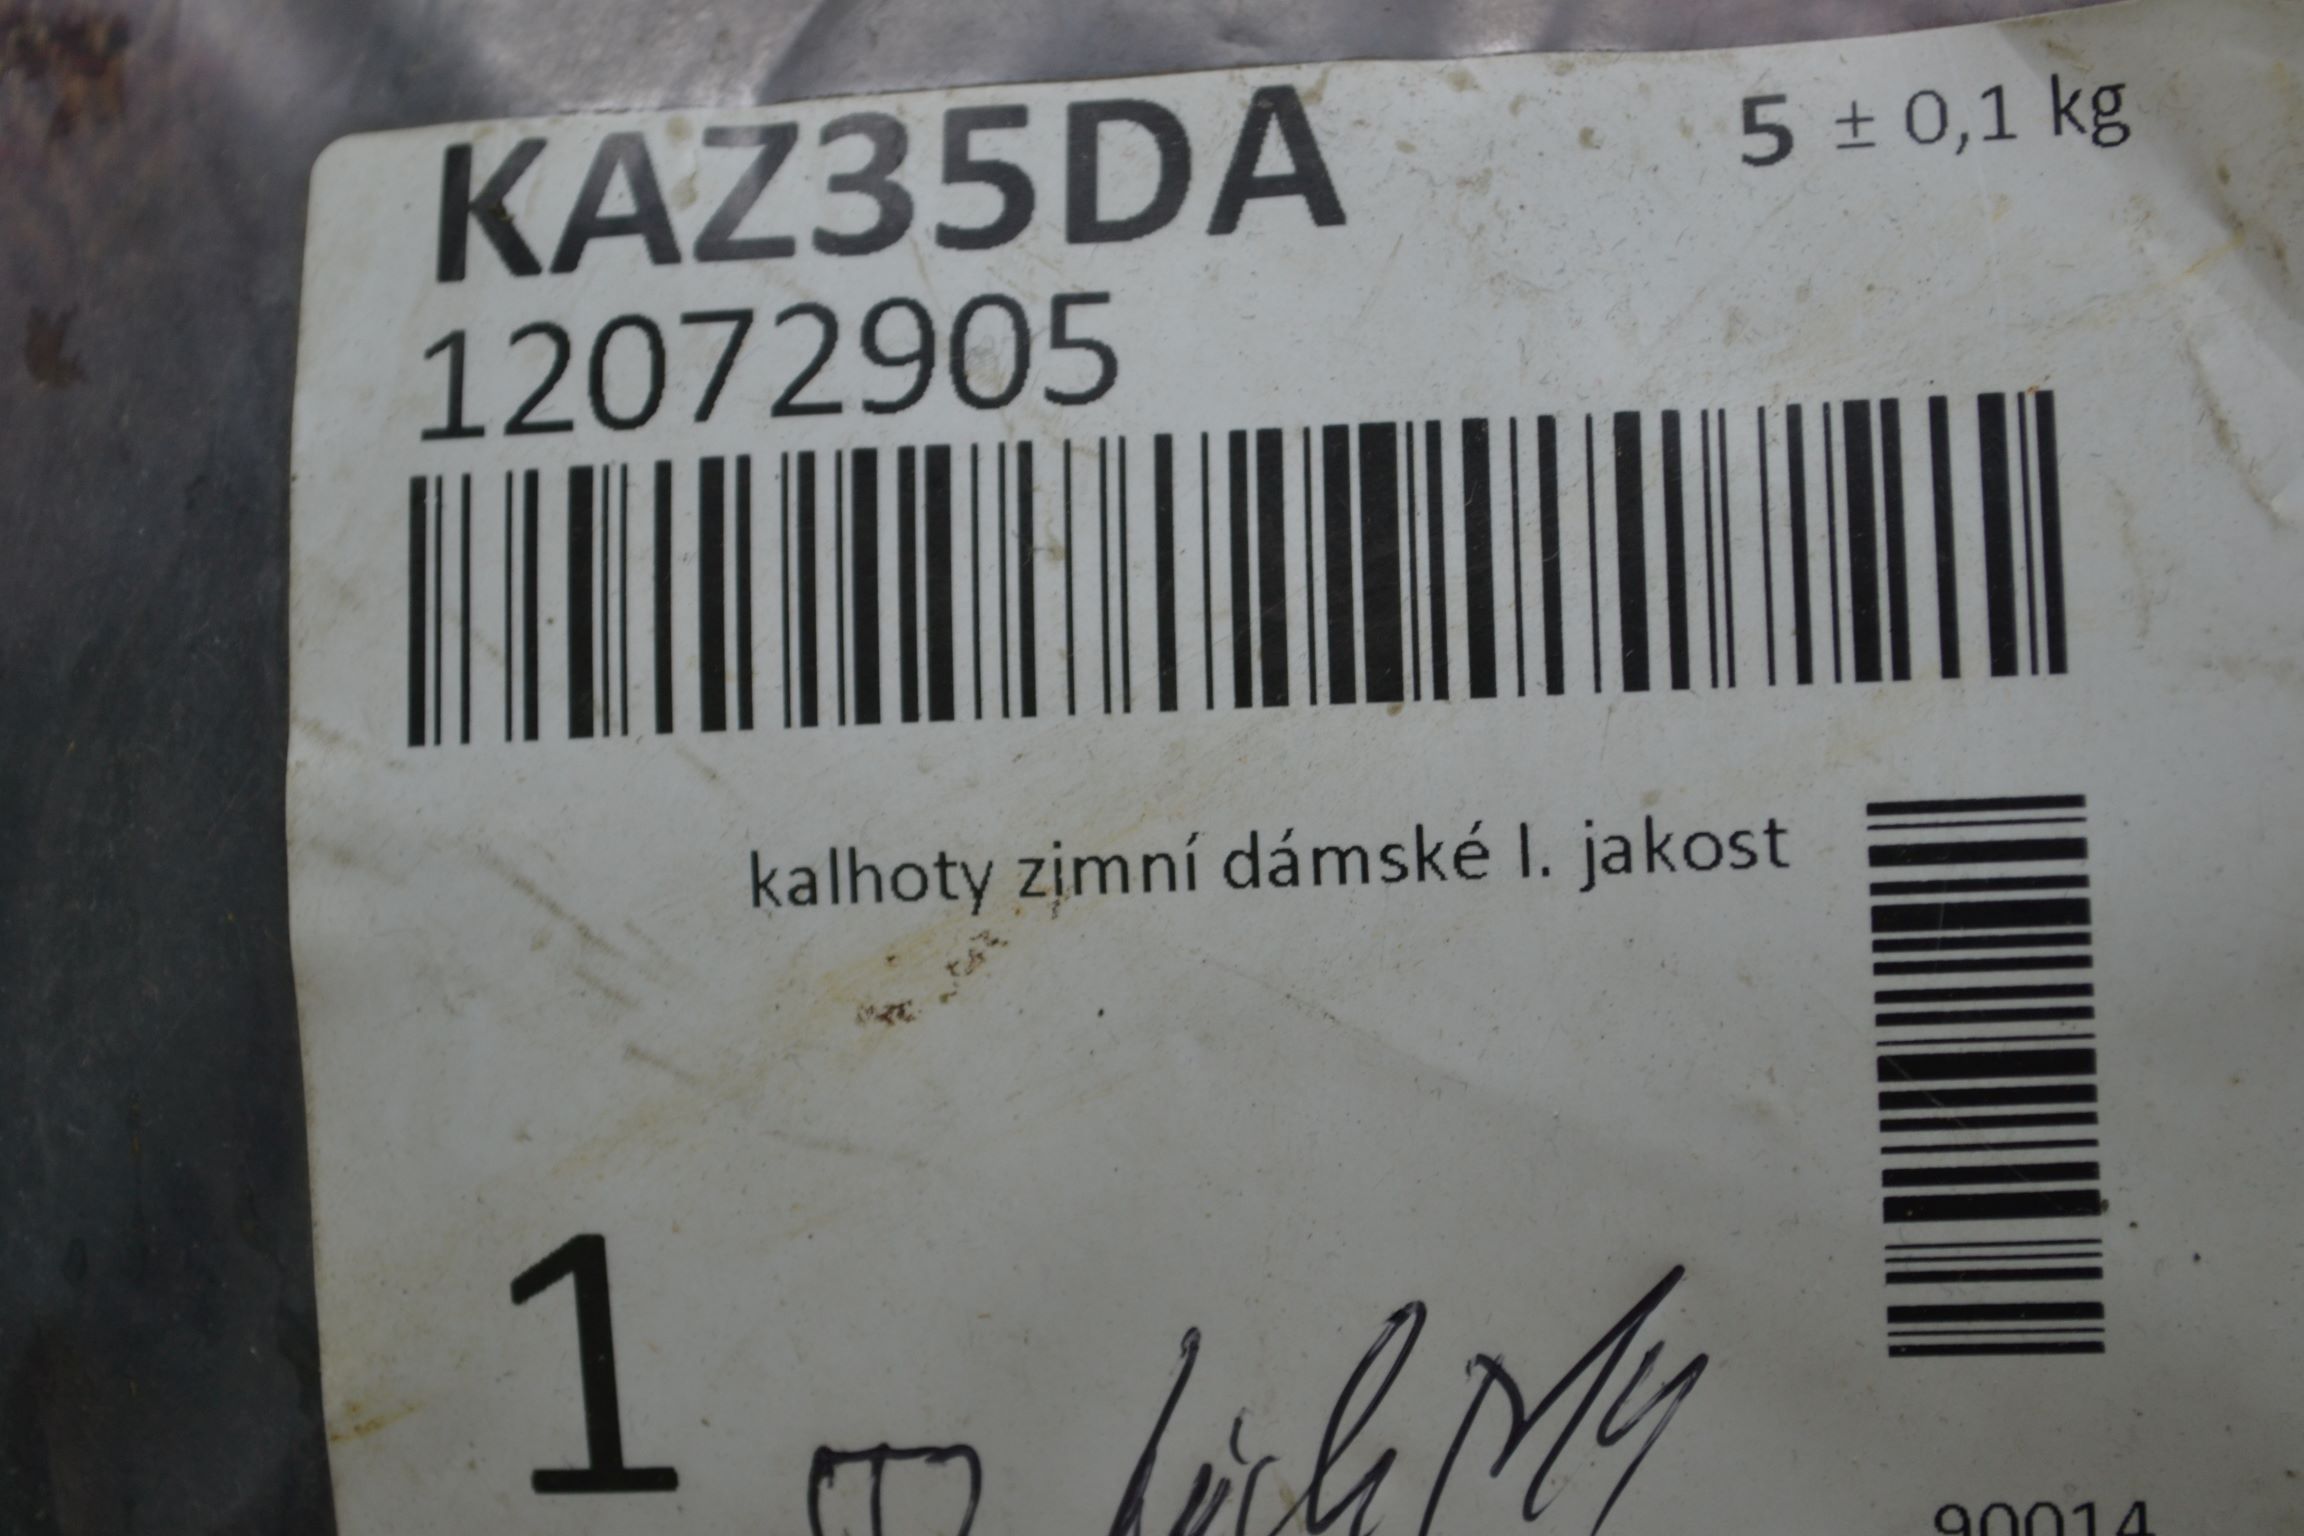 KAZ35DA Женские зимние брюки; код мешка 12072905